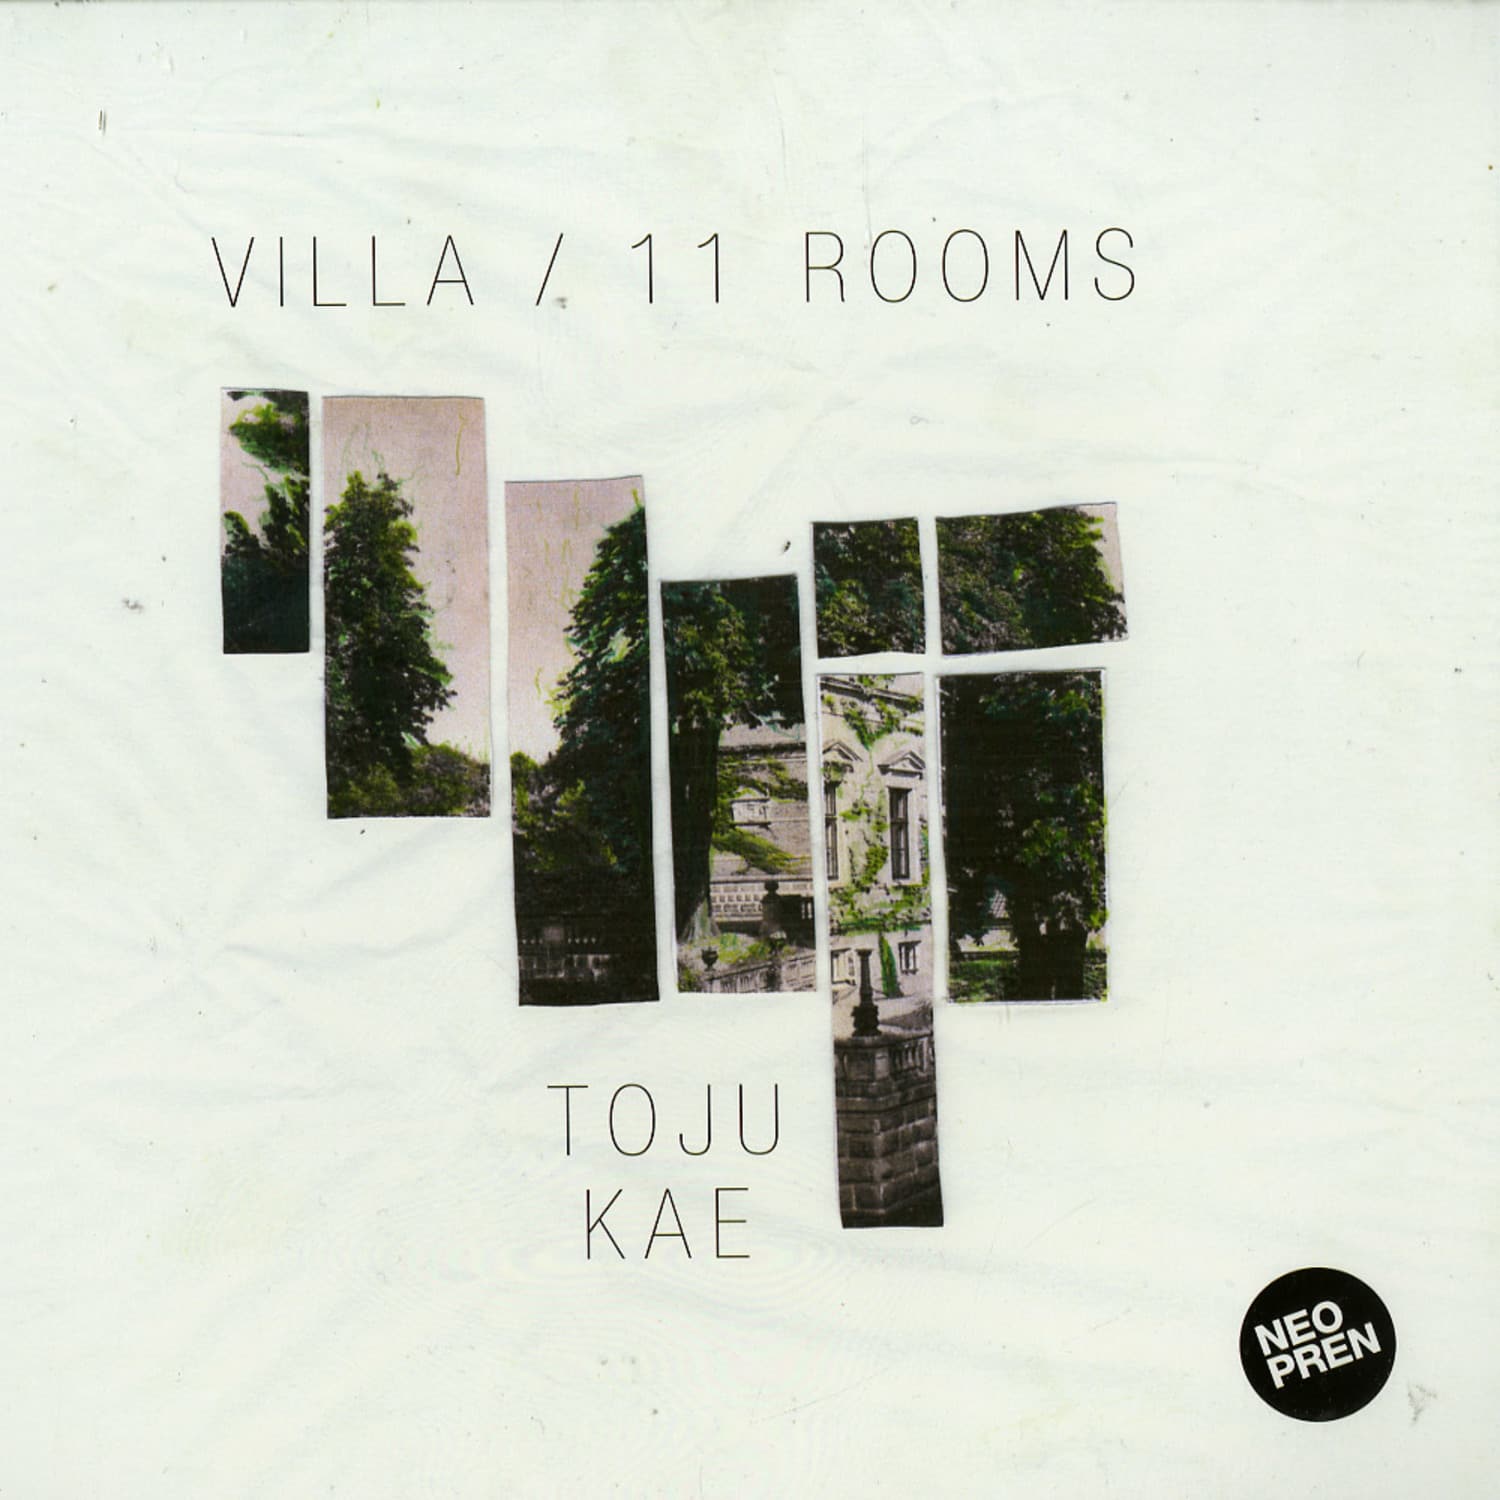 Toju Kae - VILLA / 11 ROOMS 